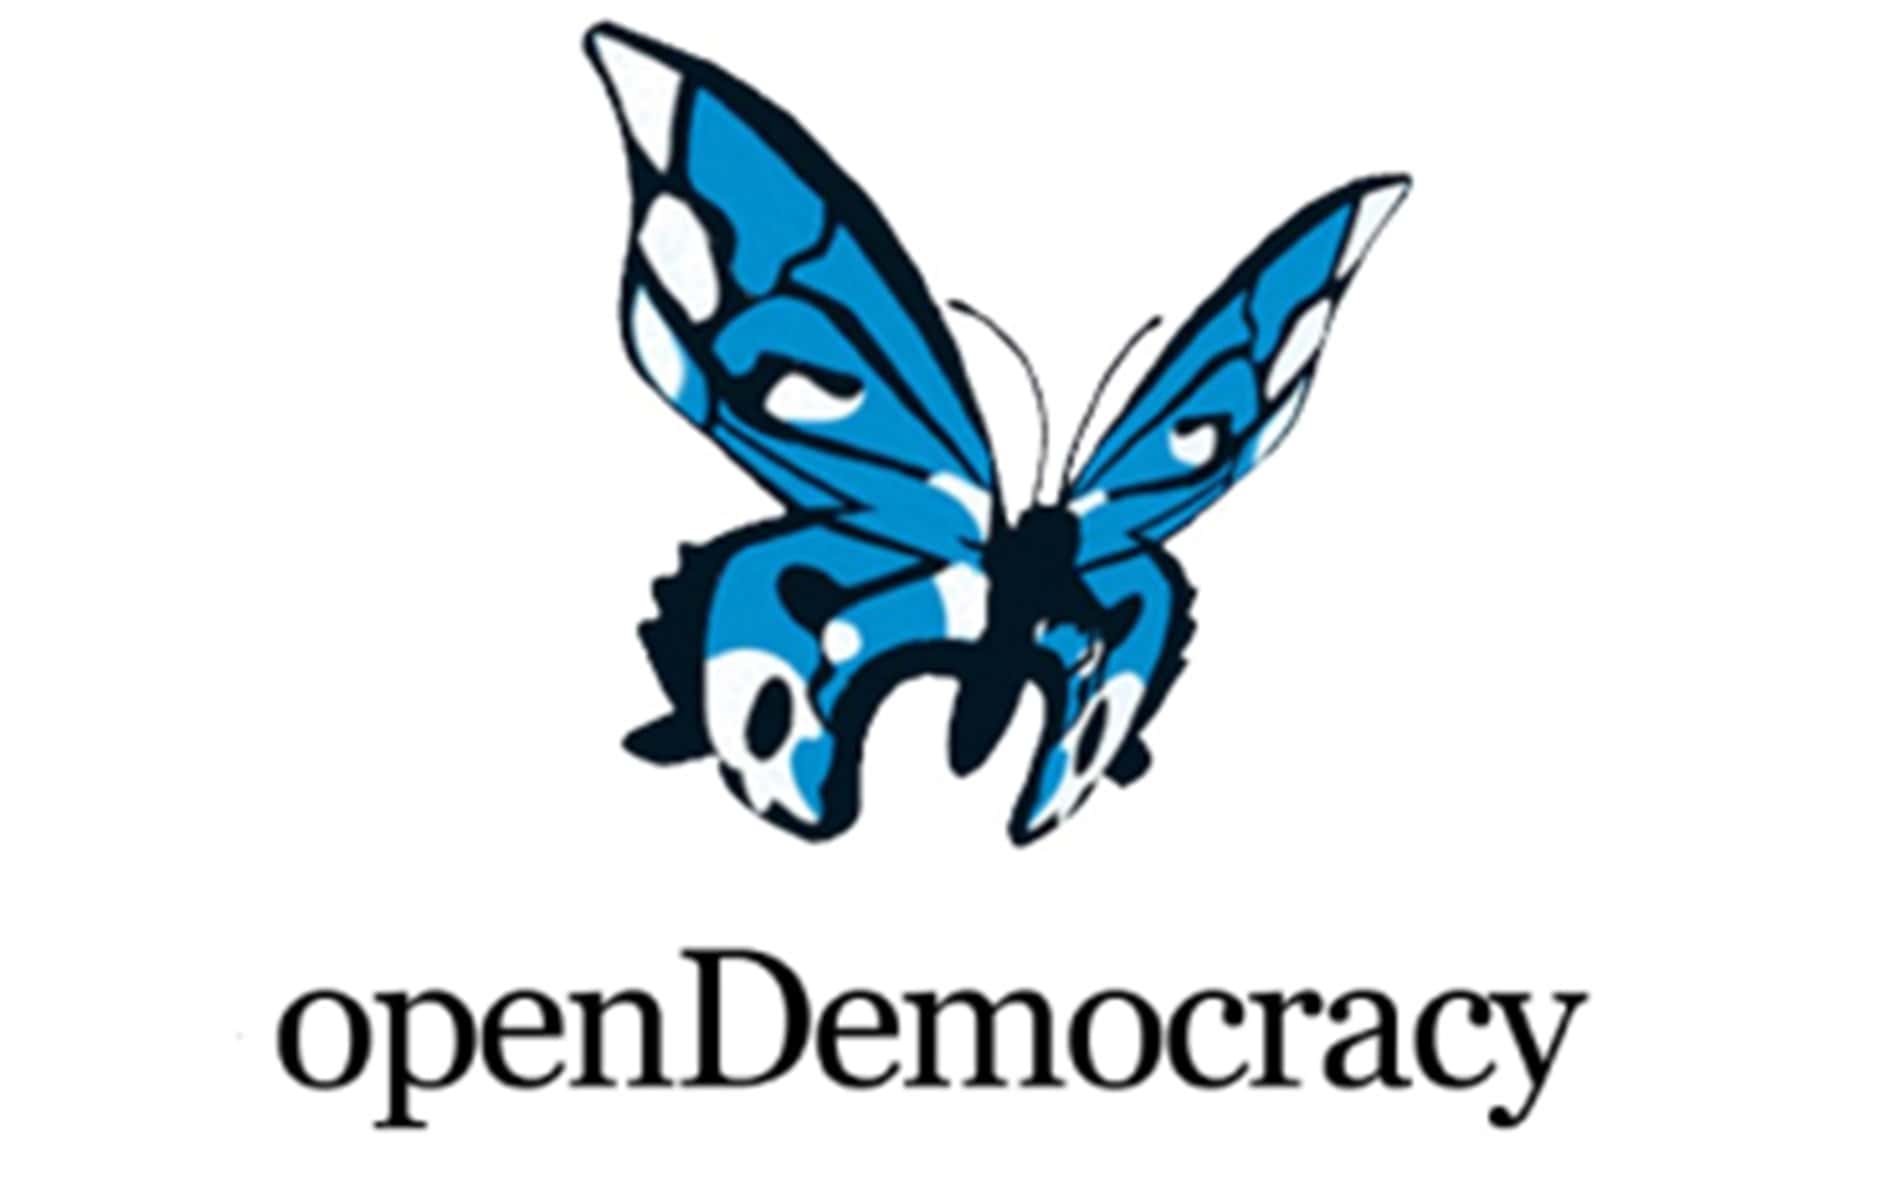 Open Democracy announces lay-offs